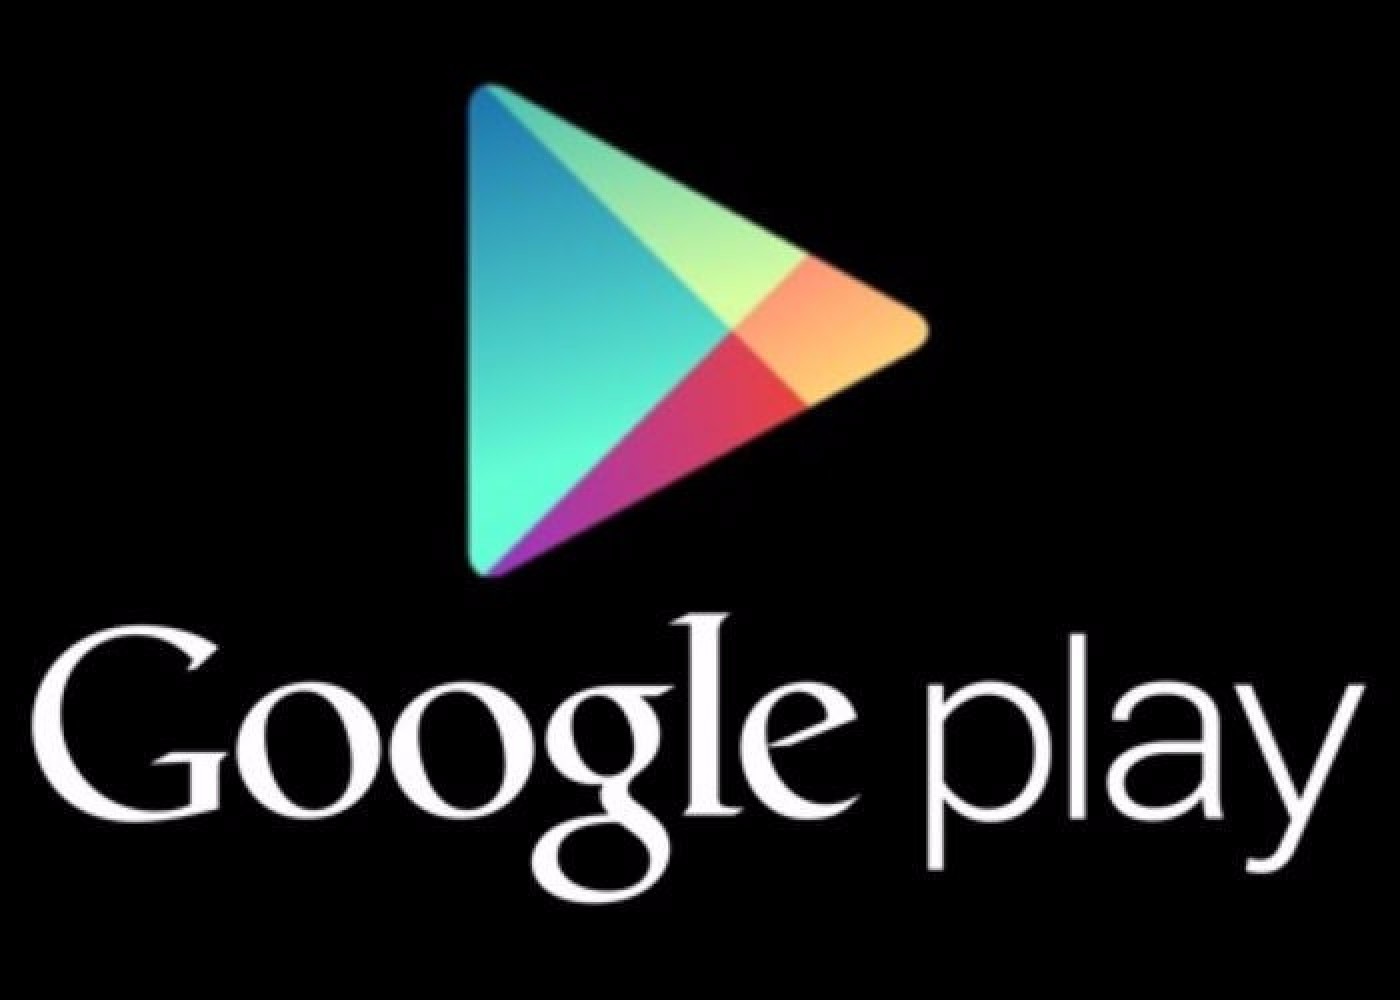 Google play d. Google Play. Google Play картинка. Эмблема гугл плей. On Google Play.